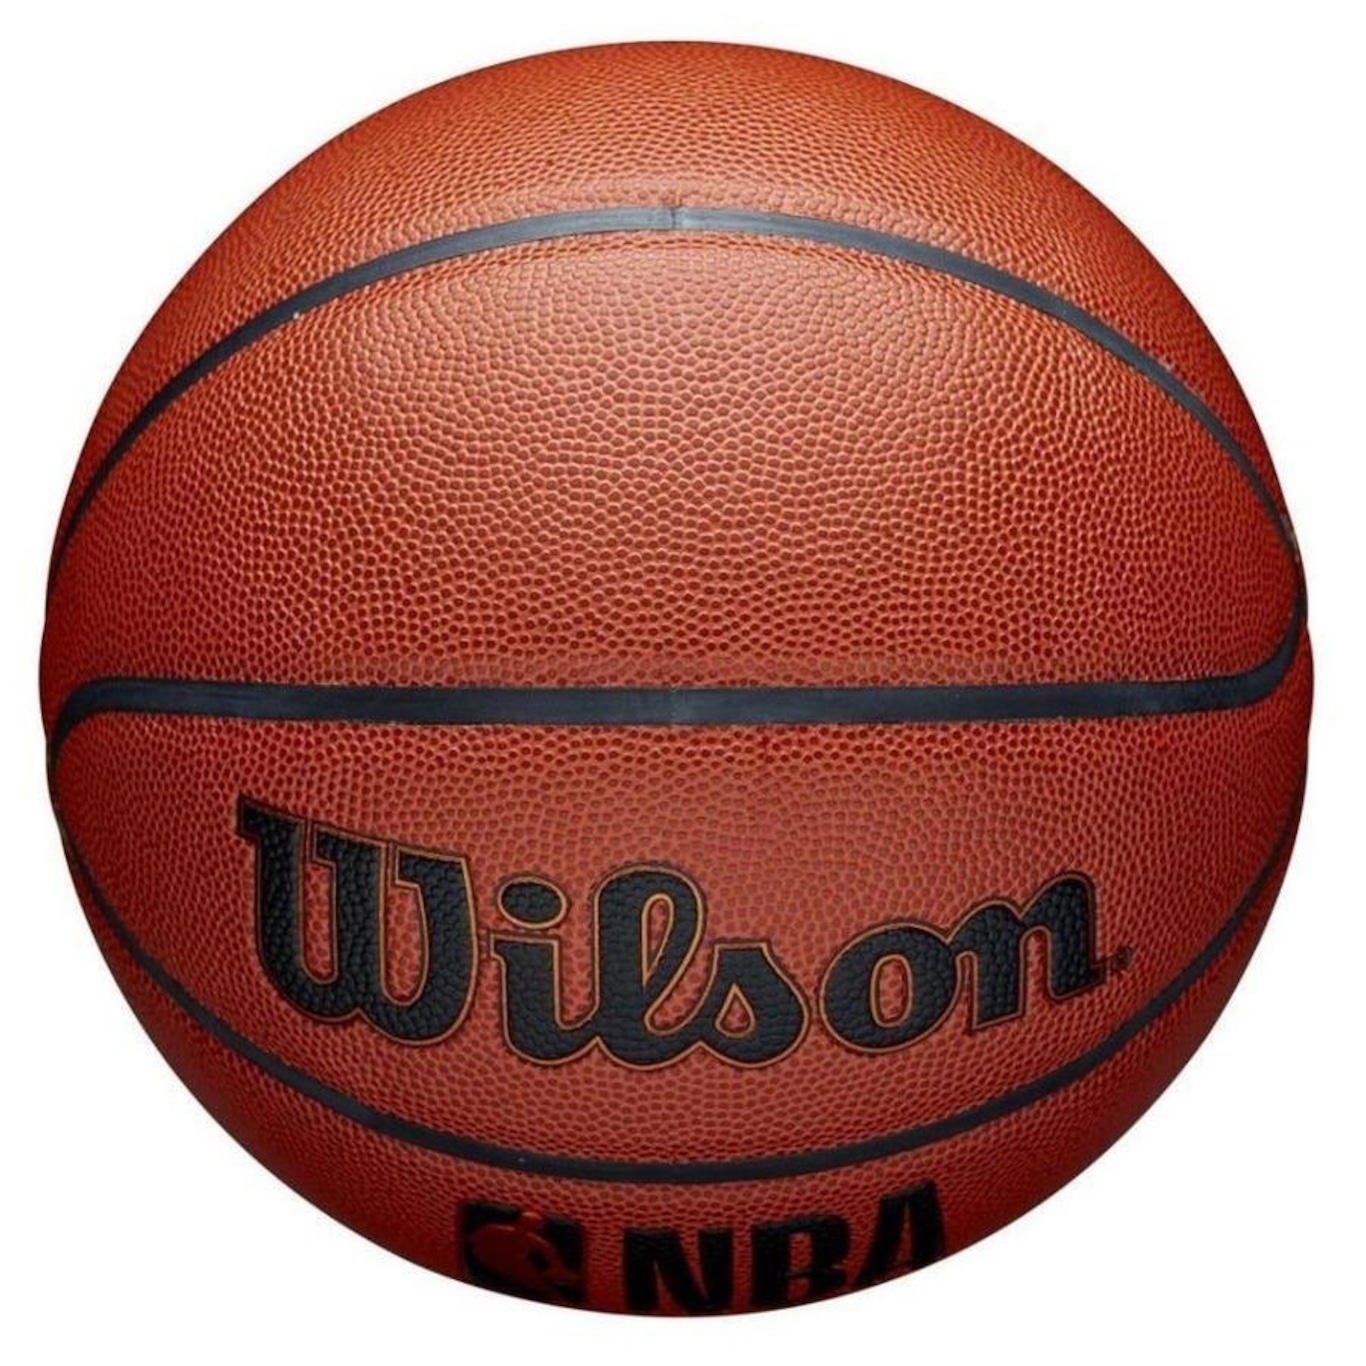 Bola de Basquete Wilson NBA Forge Plus